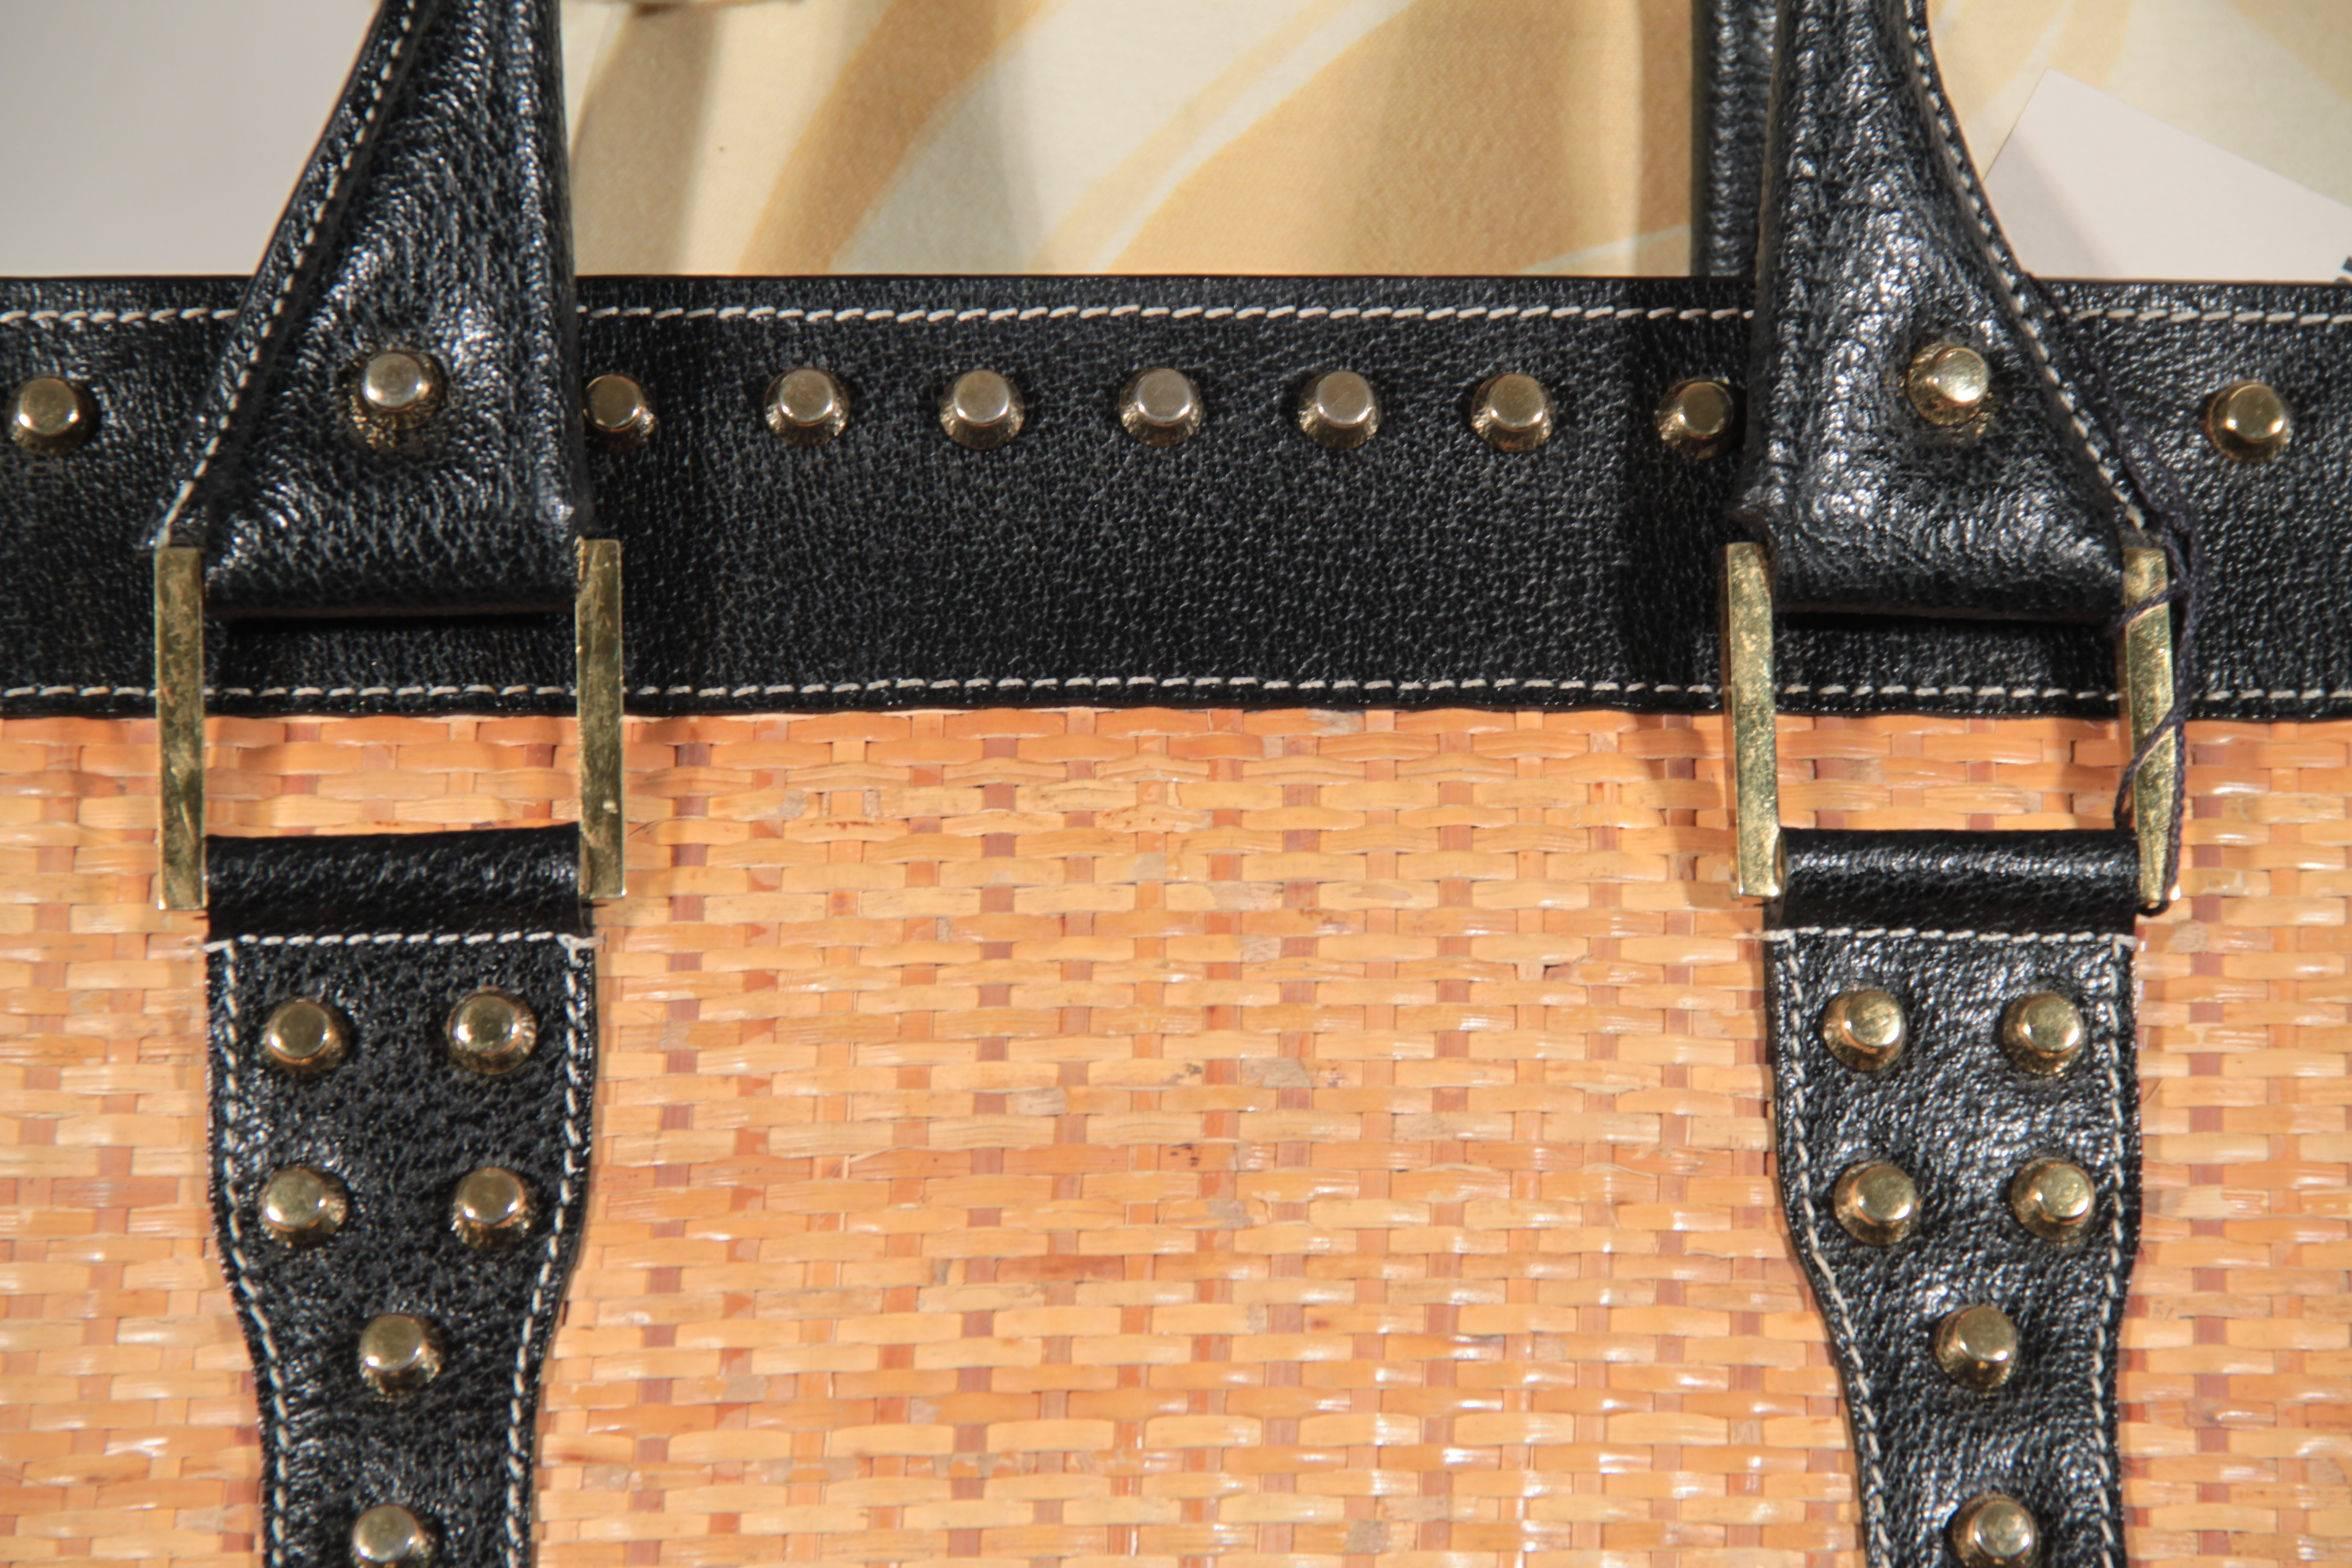 Brown FENDI Italian STRAW & Black Leather STUDDED LARGE TOTE Handbag SATCHEL